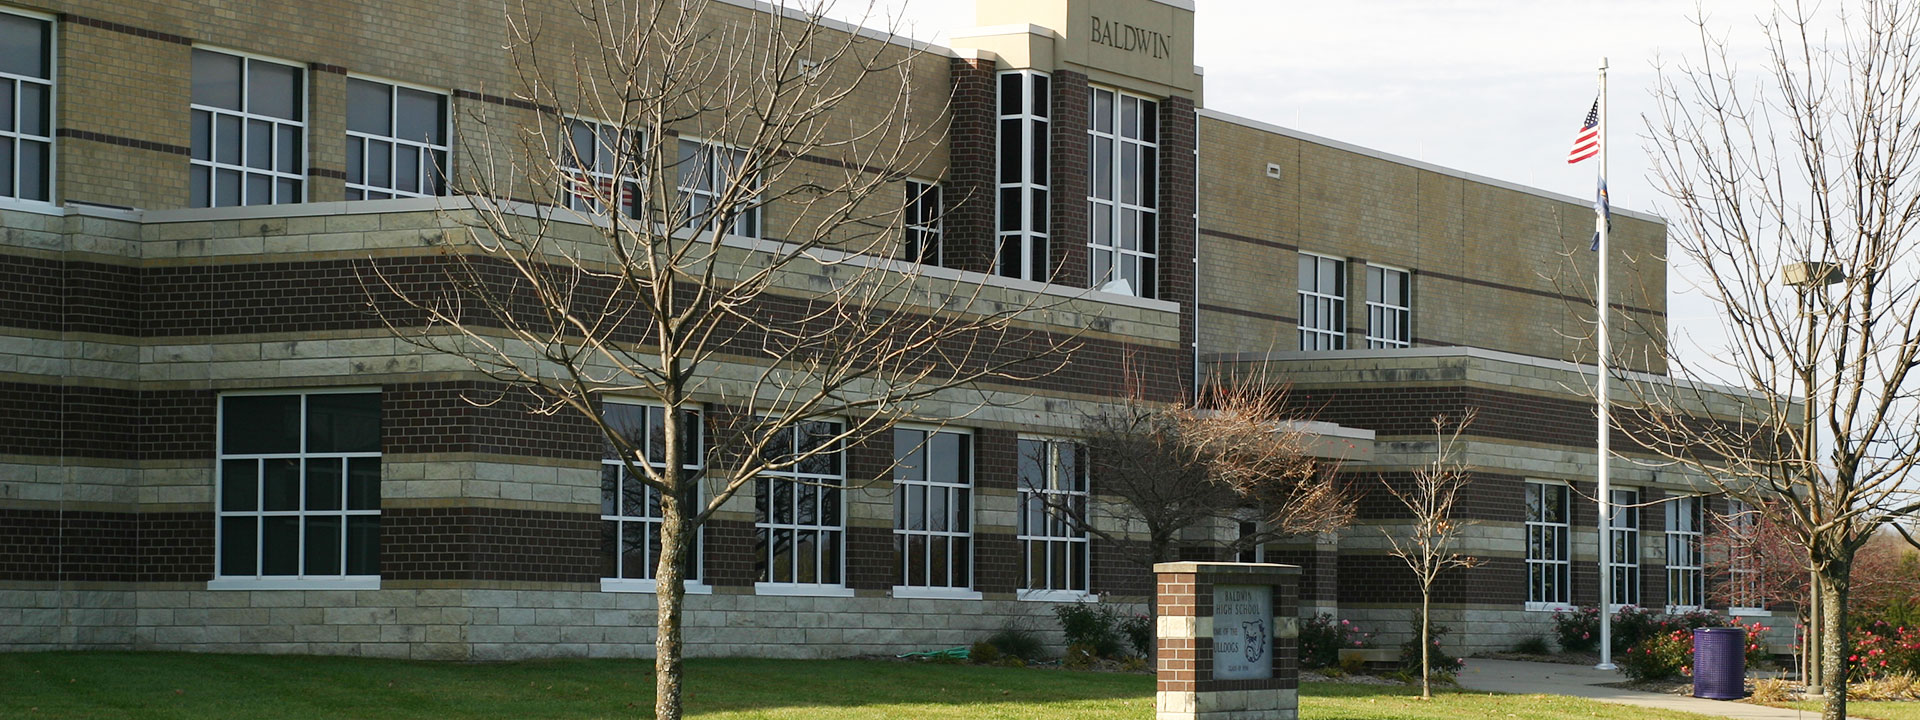 Photo of the Baldwin HIgh School building exterior